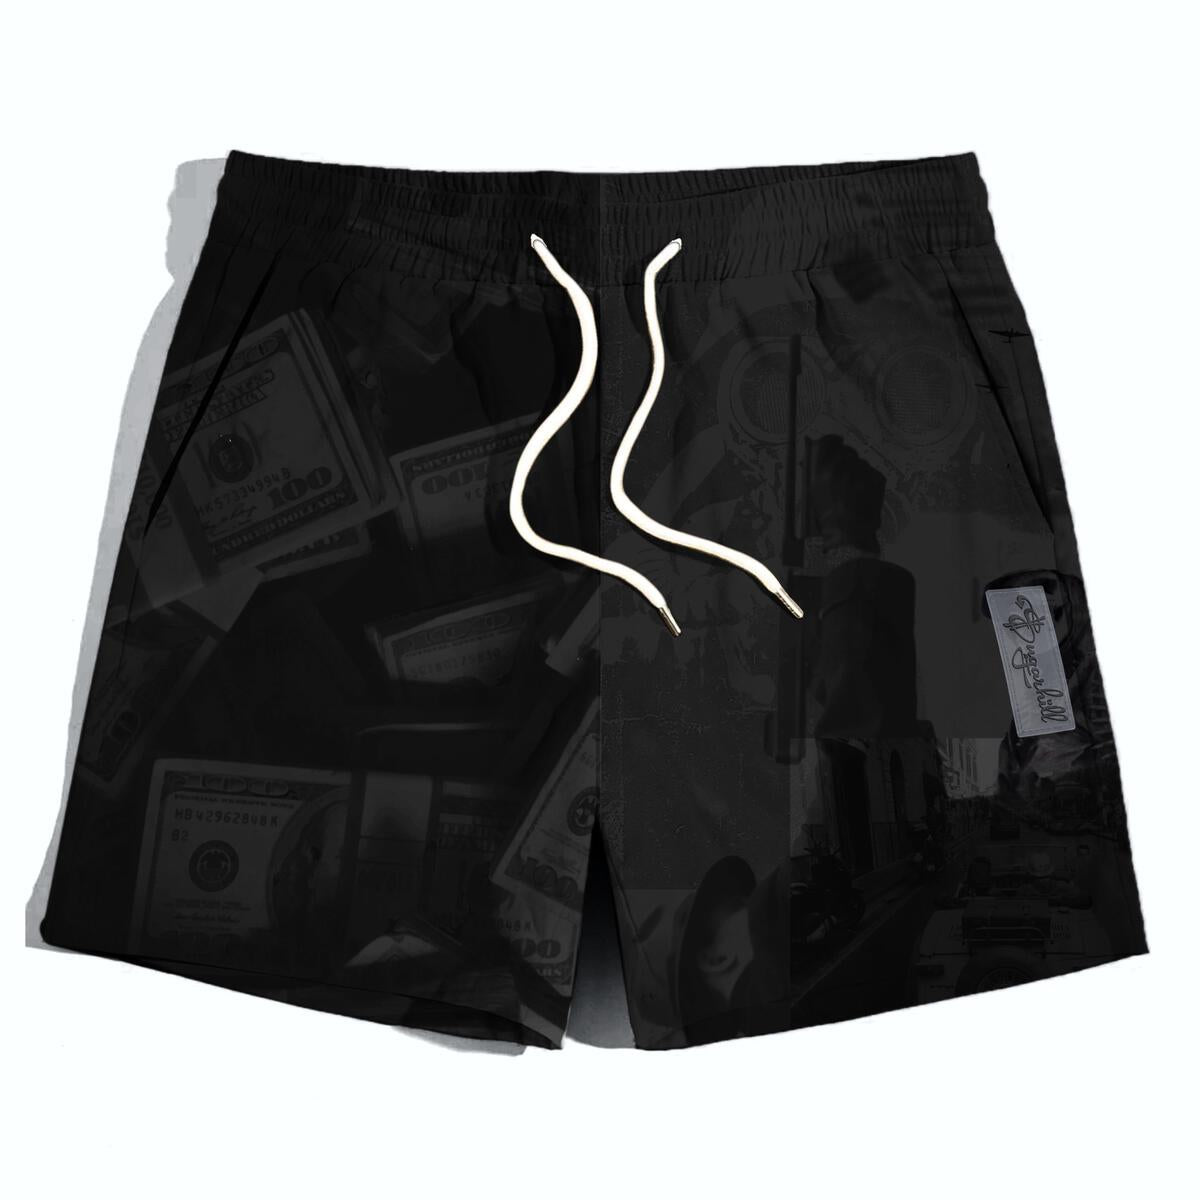 Mob Shorts - Black Print